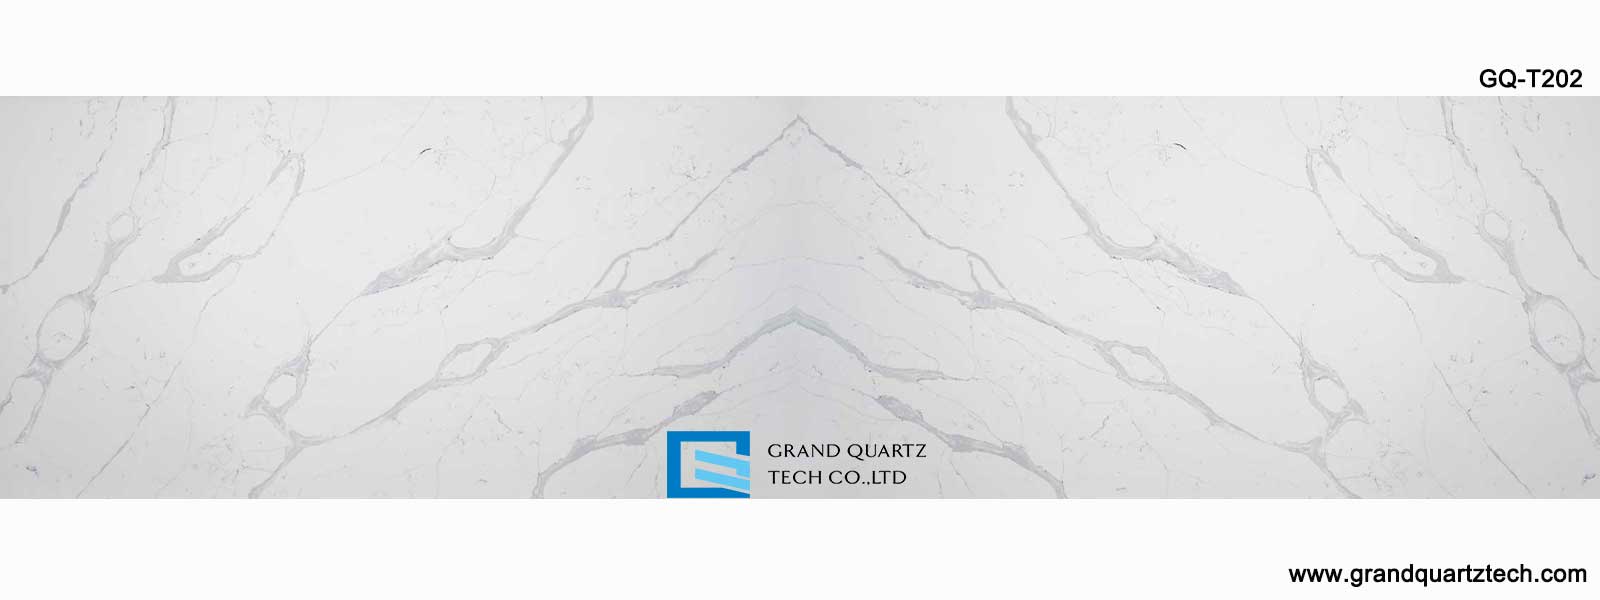 GQ-T202-symmetrical-quartz.jpg 